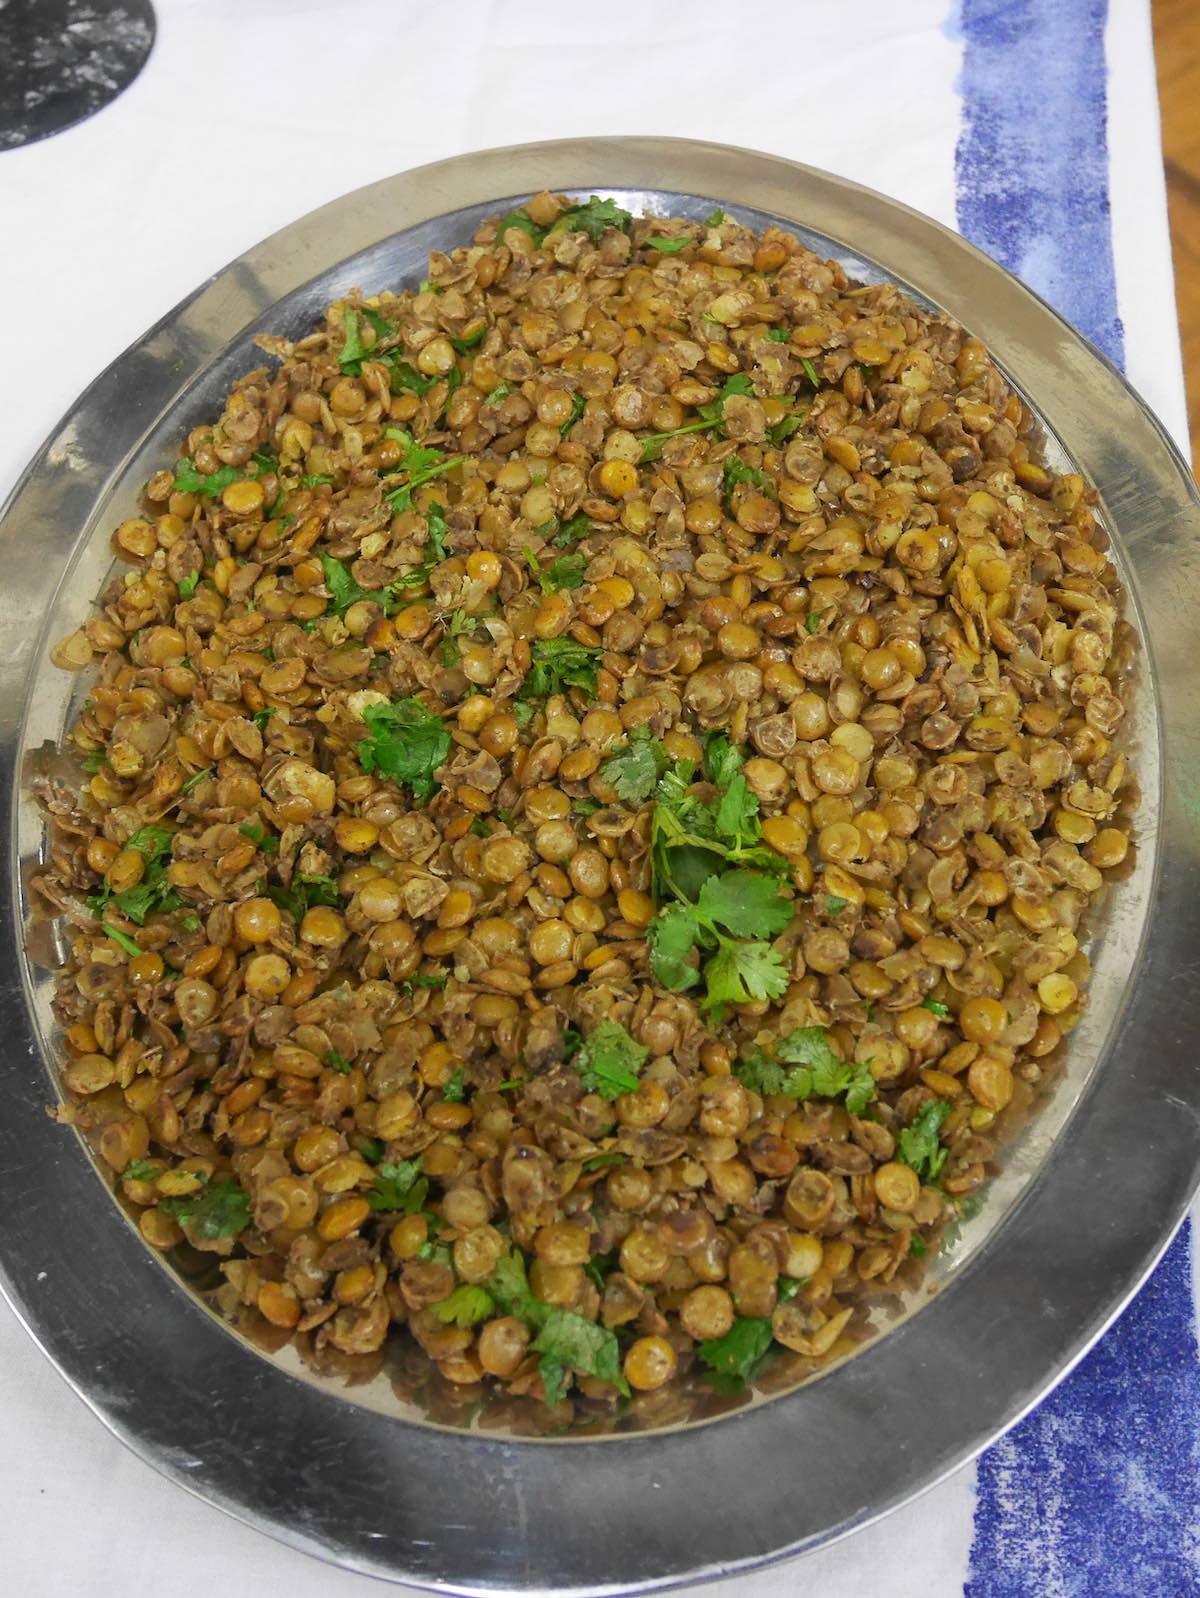 Dish of lentils